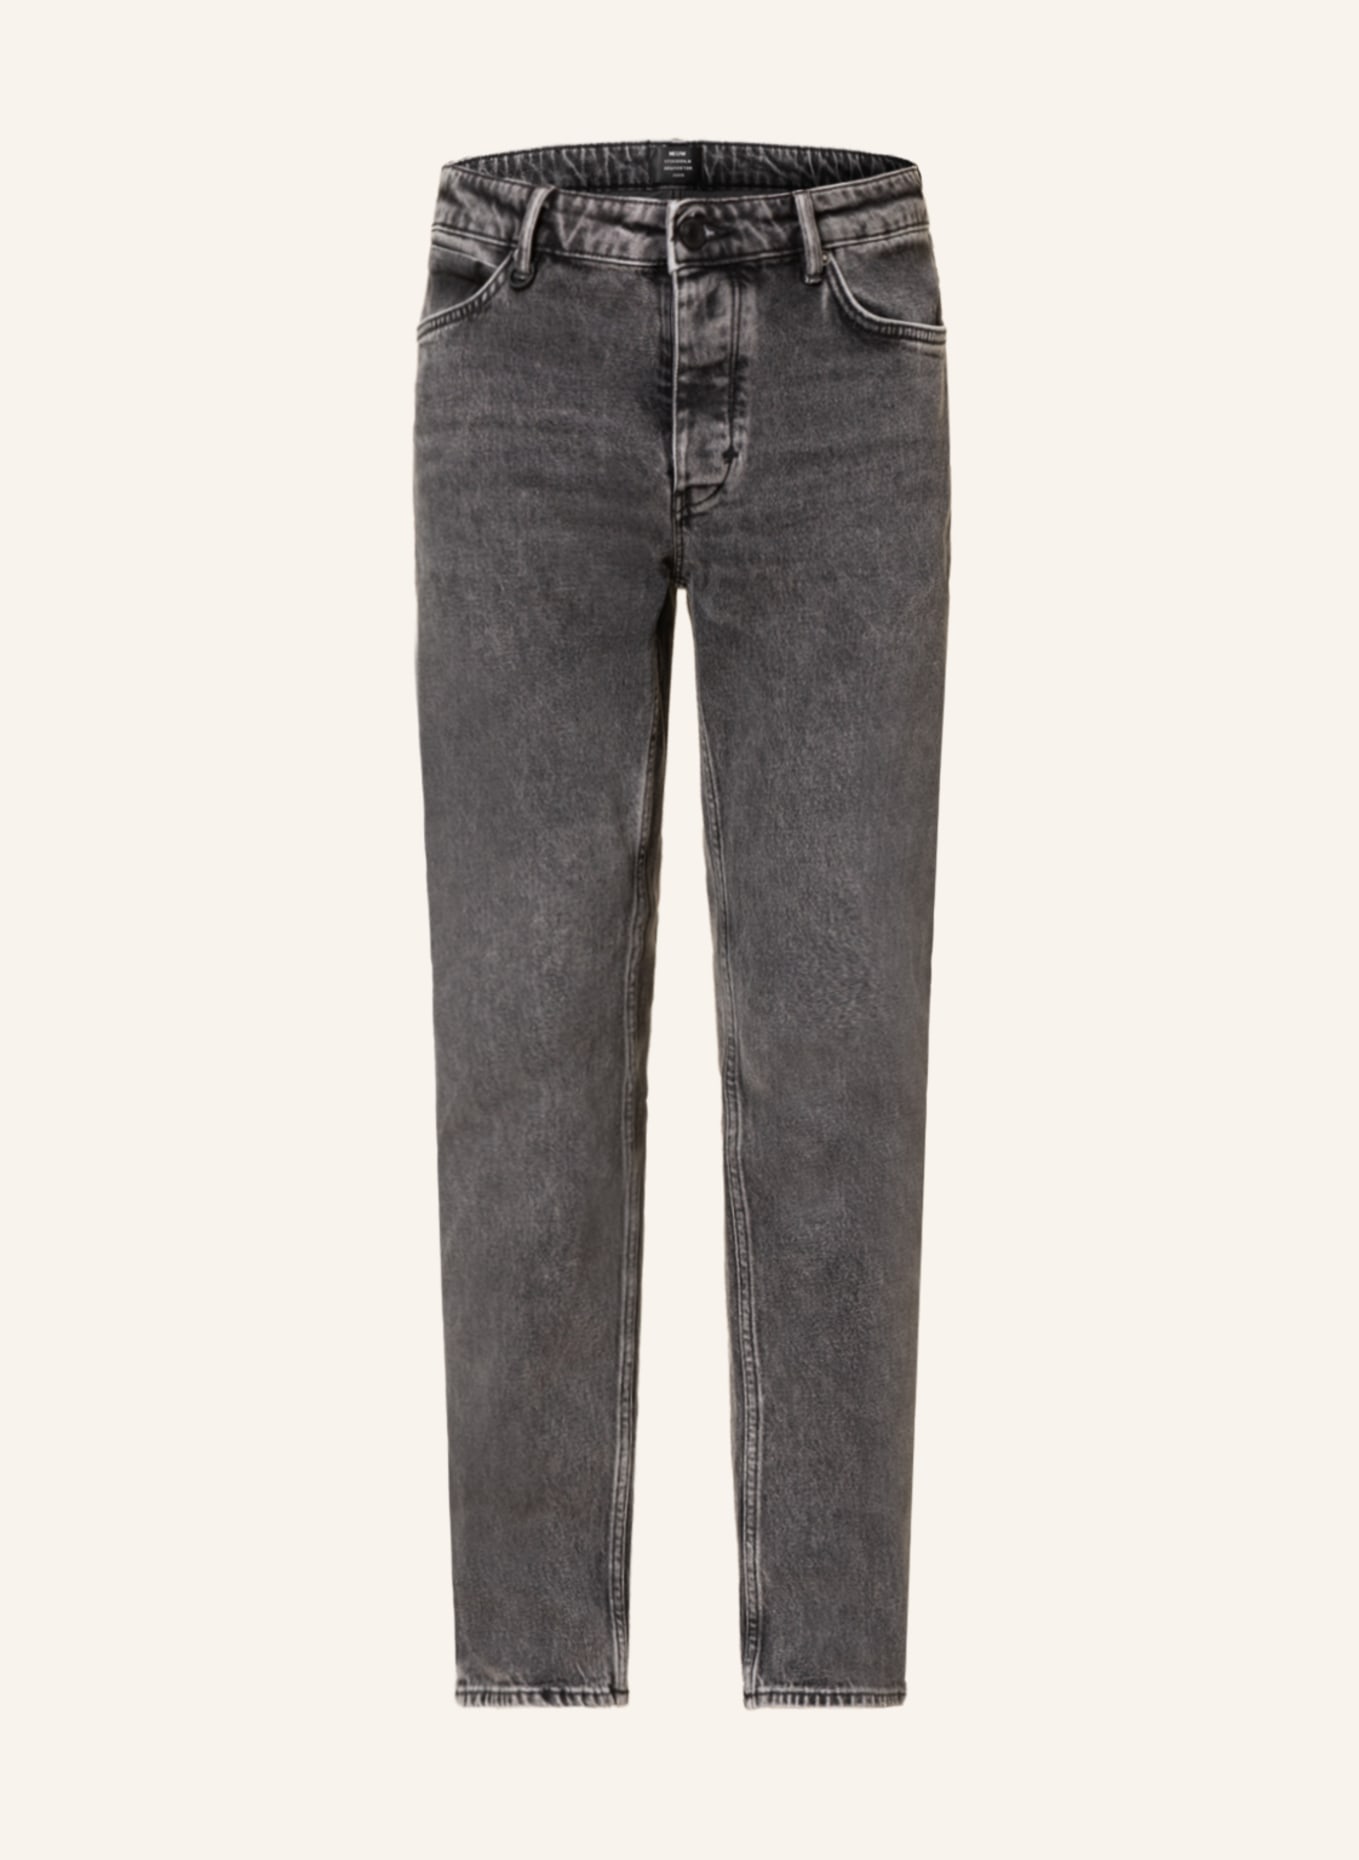 NEUW Jeans RAY Regular Fit, Farbe: Dead Moon (Bild 1)